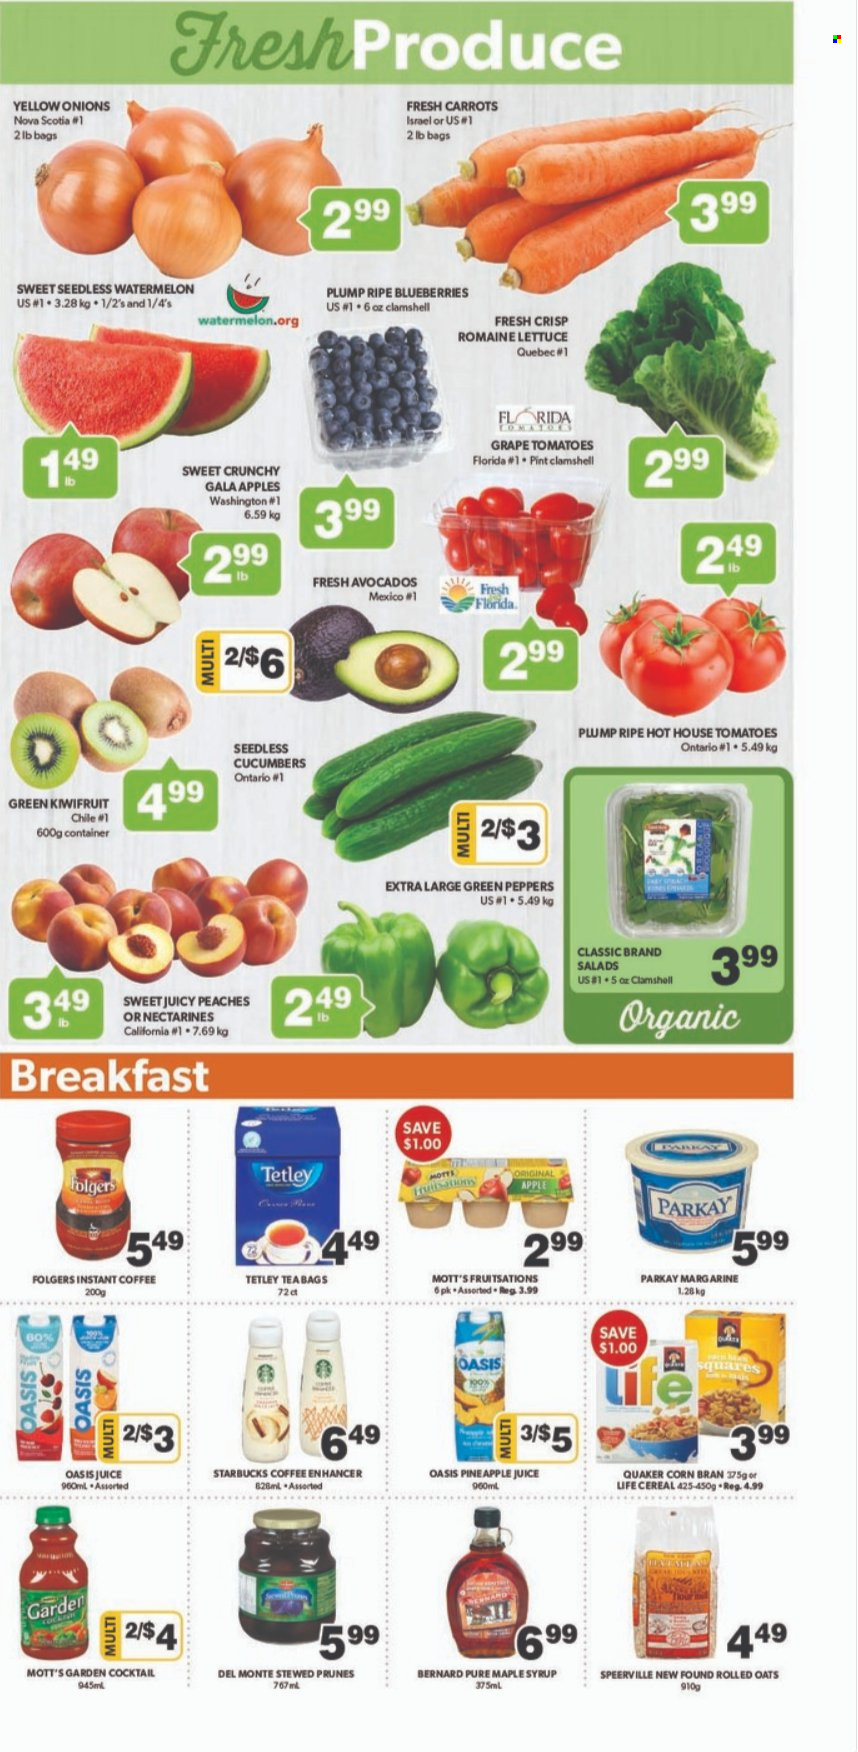 thumbnail - Circulaire Colemans - 23 Juin 2022 - 29 Juin 2022 - Produits soldés - prune, nectarine, margarine, Oasis, Starbucks. Page 2.